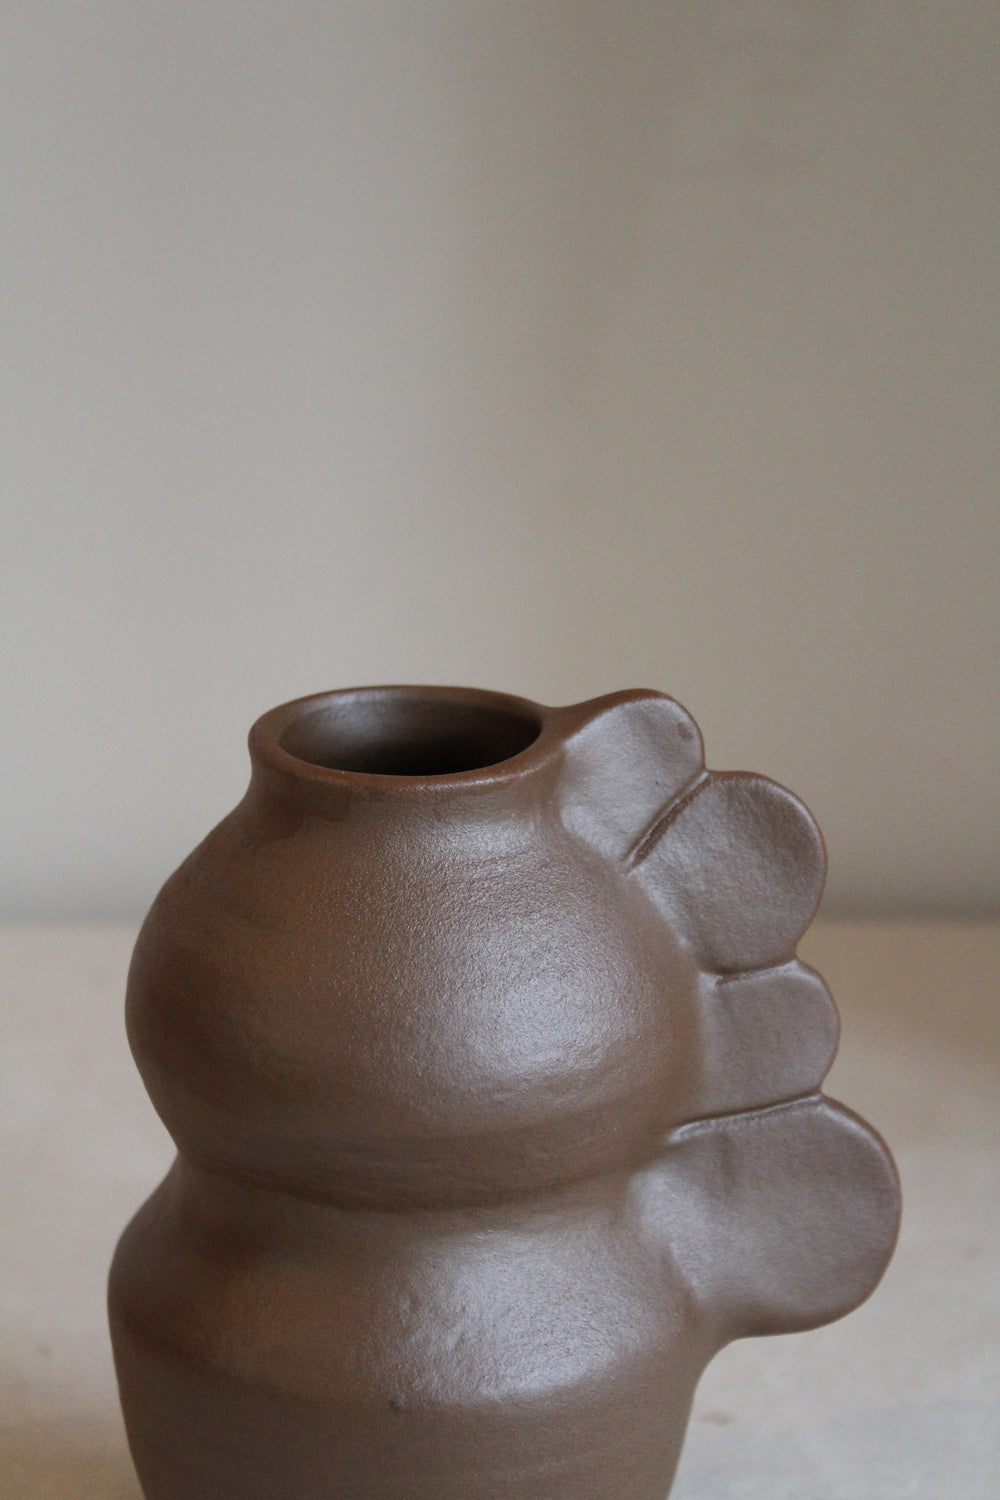 Close-up of the Medee Brun Vase by Jars Ceramistes.